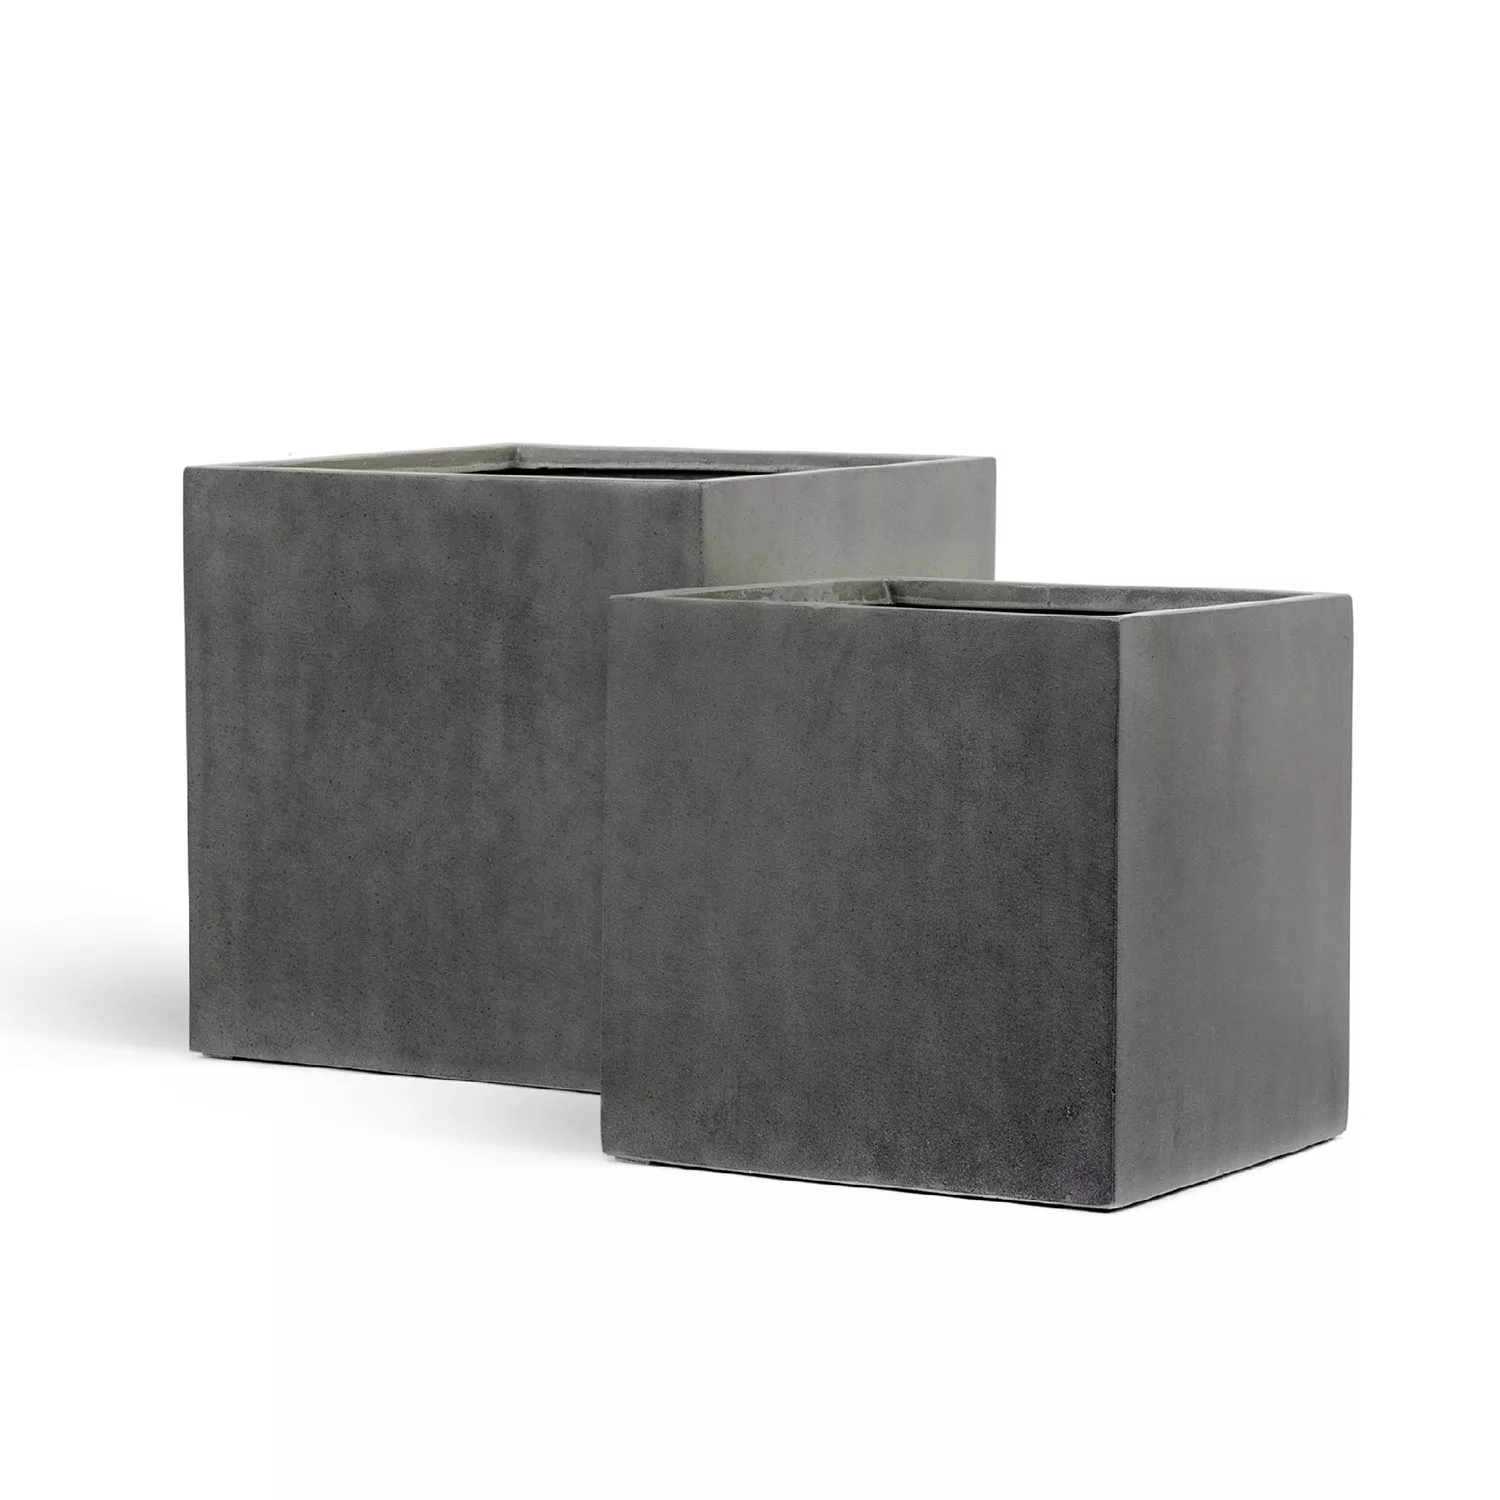 Кашпо TREEZ Effectory Beton - Куб (Без вставок), Тёмно-серый бетон